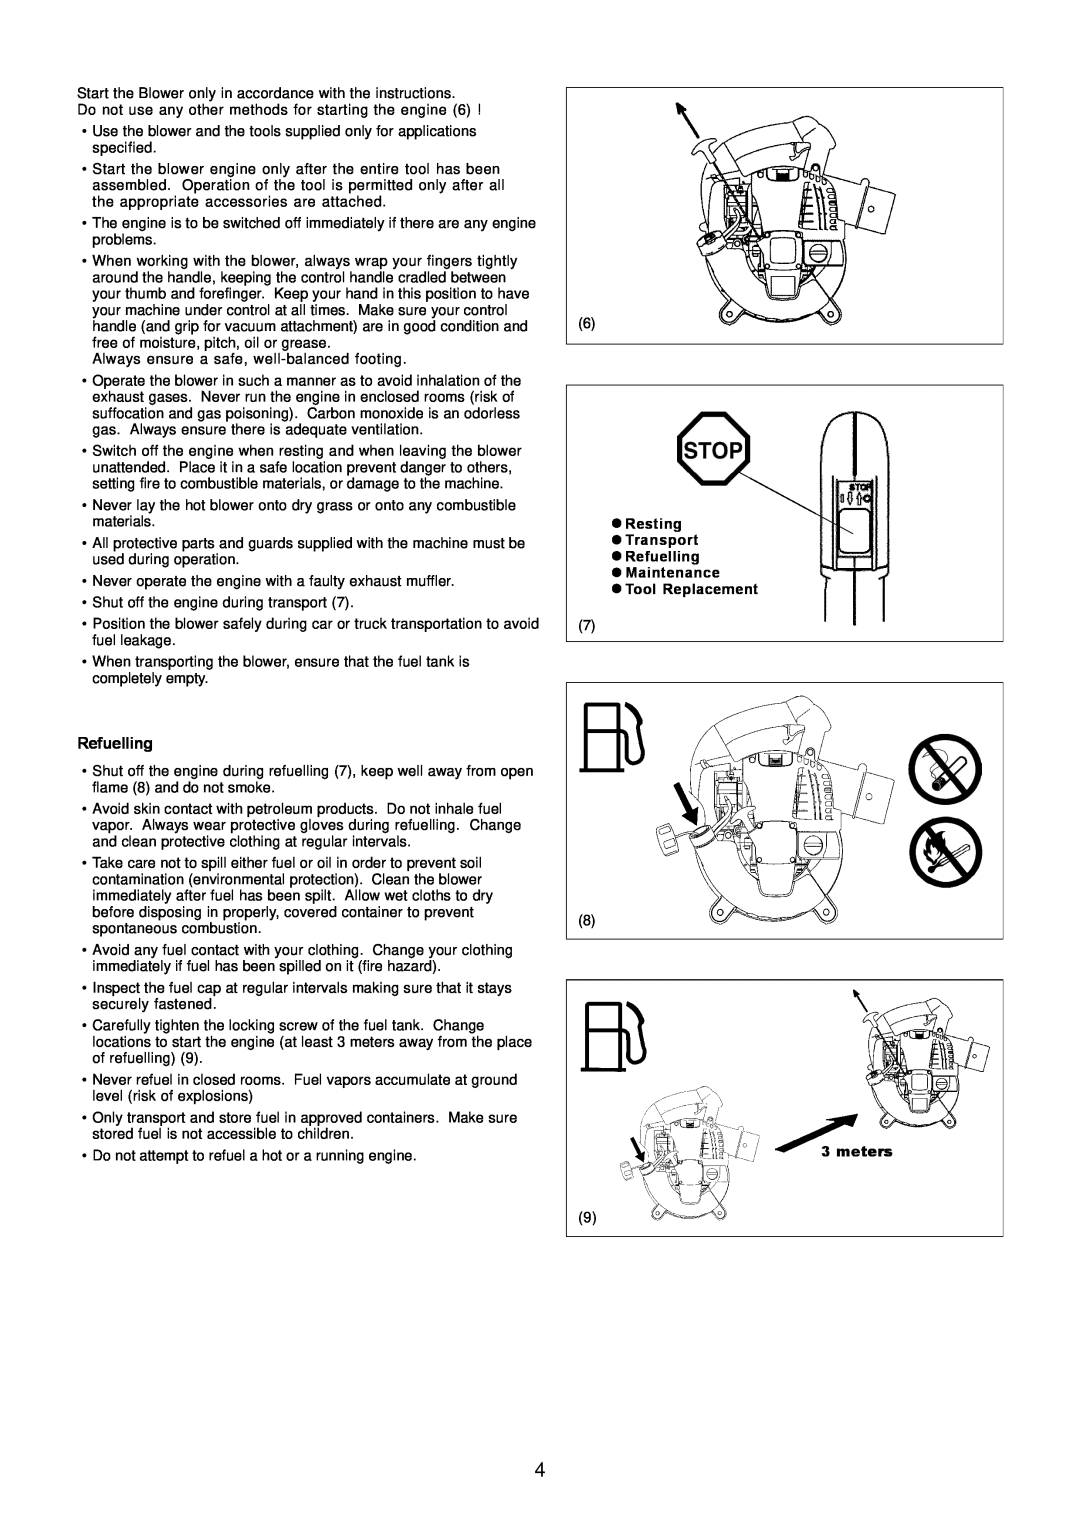 Makita BHX2500 instruction manual Resting Transport Refuelling Maintenance Tool Replacement, meters 